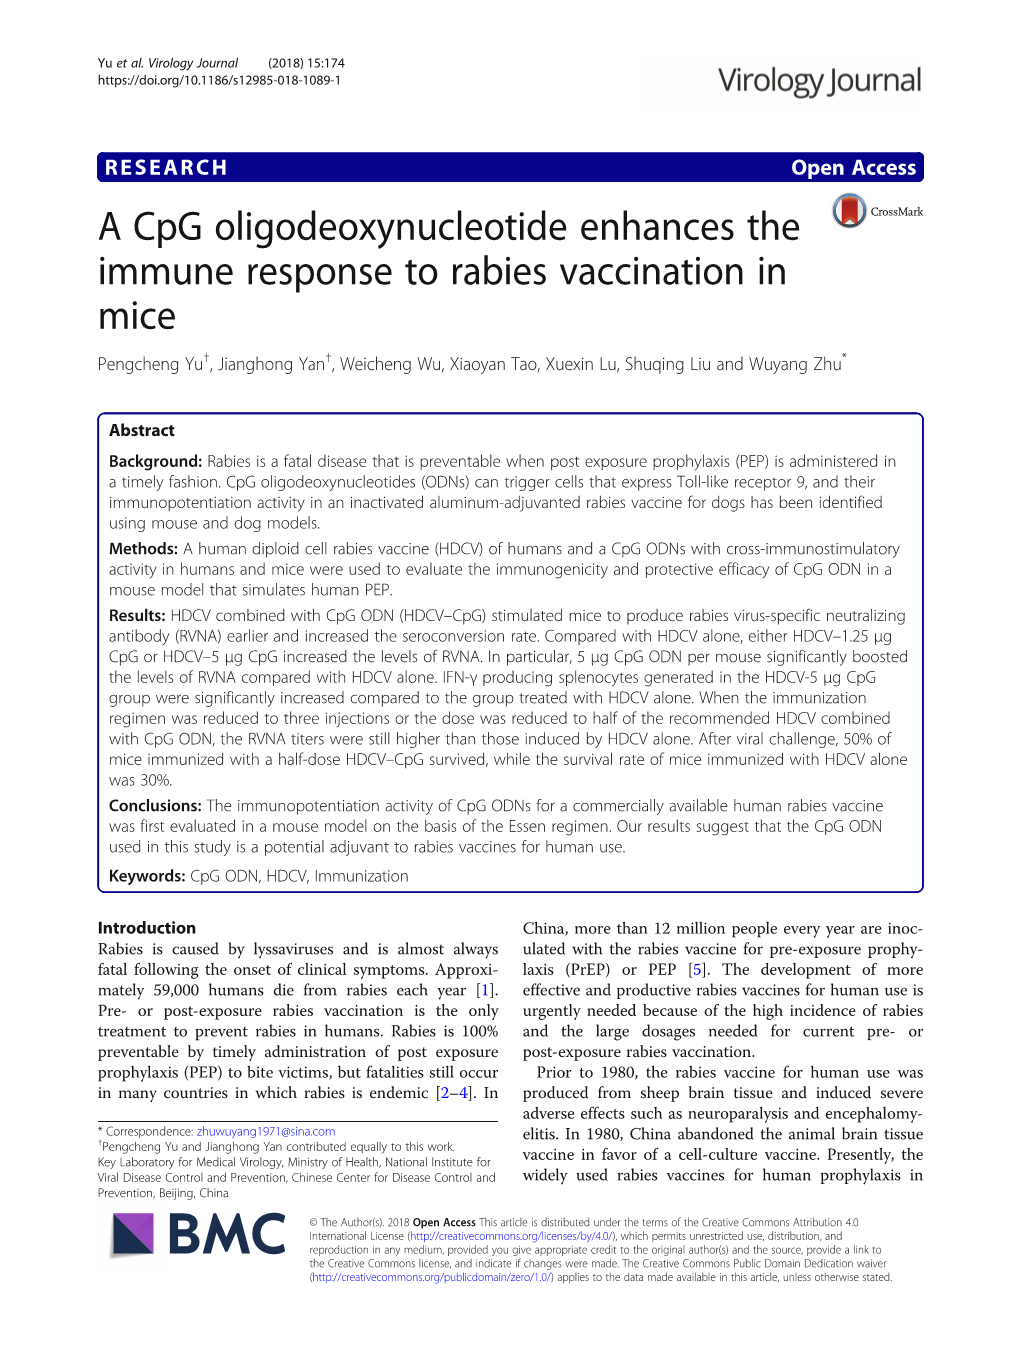 A Cpg Oligodeoxynucleotide Enhances the Immune Response To